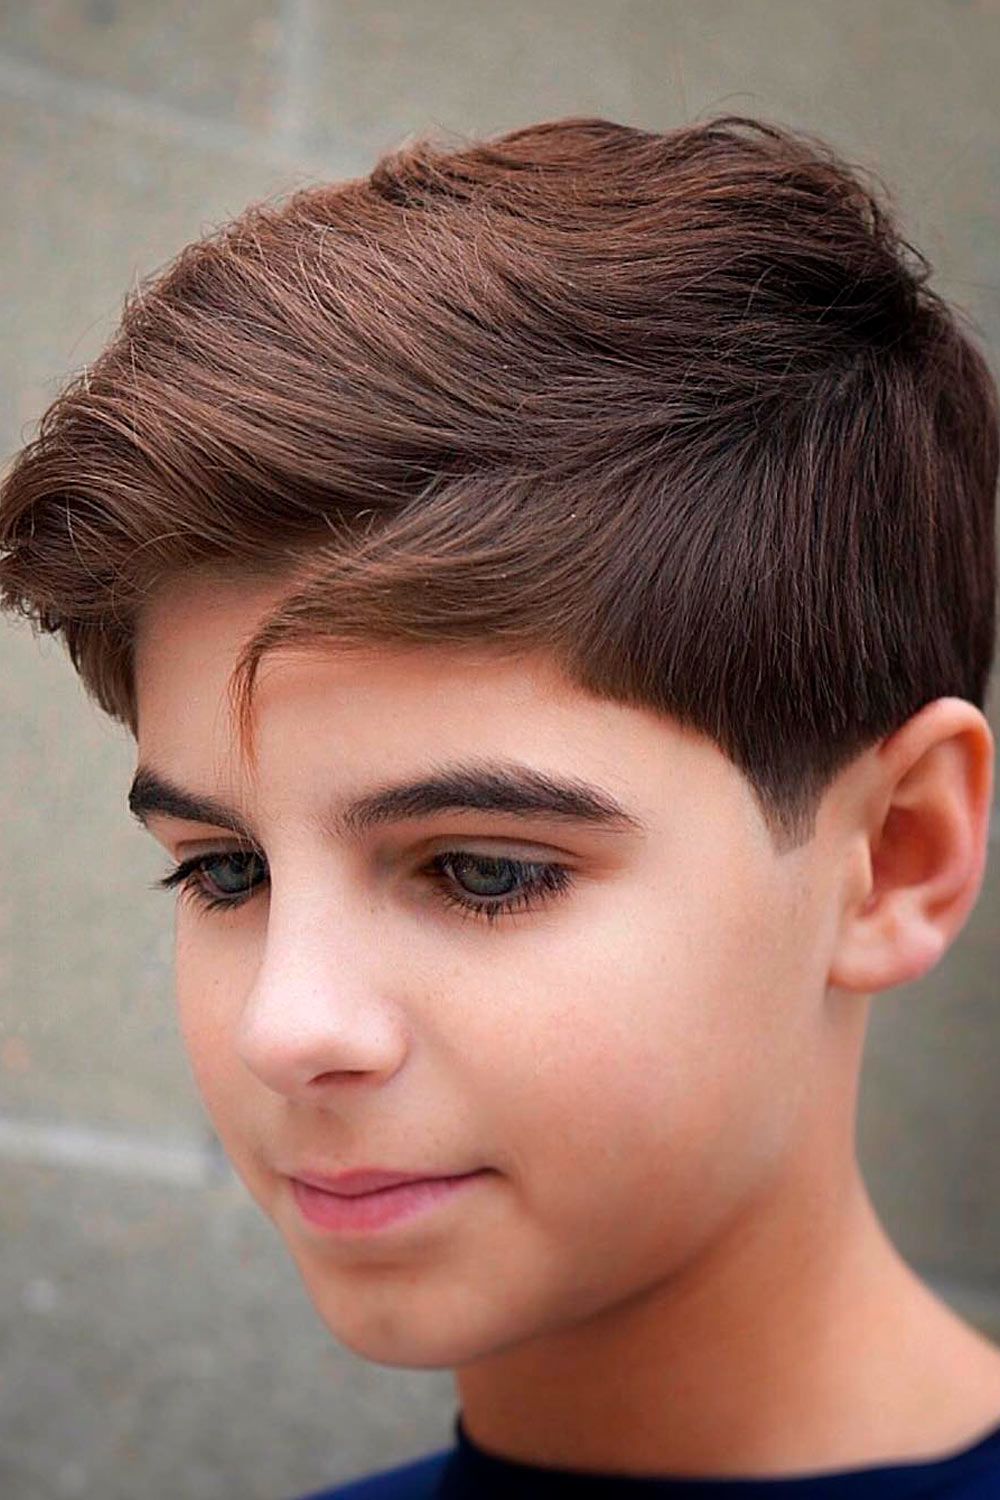 Classy Medium Haircuts For Boys, boy's haircuts, haircuts for boys, boys medium haircuts, cutting boys hair, boys haircuts longer